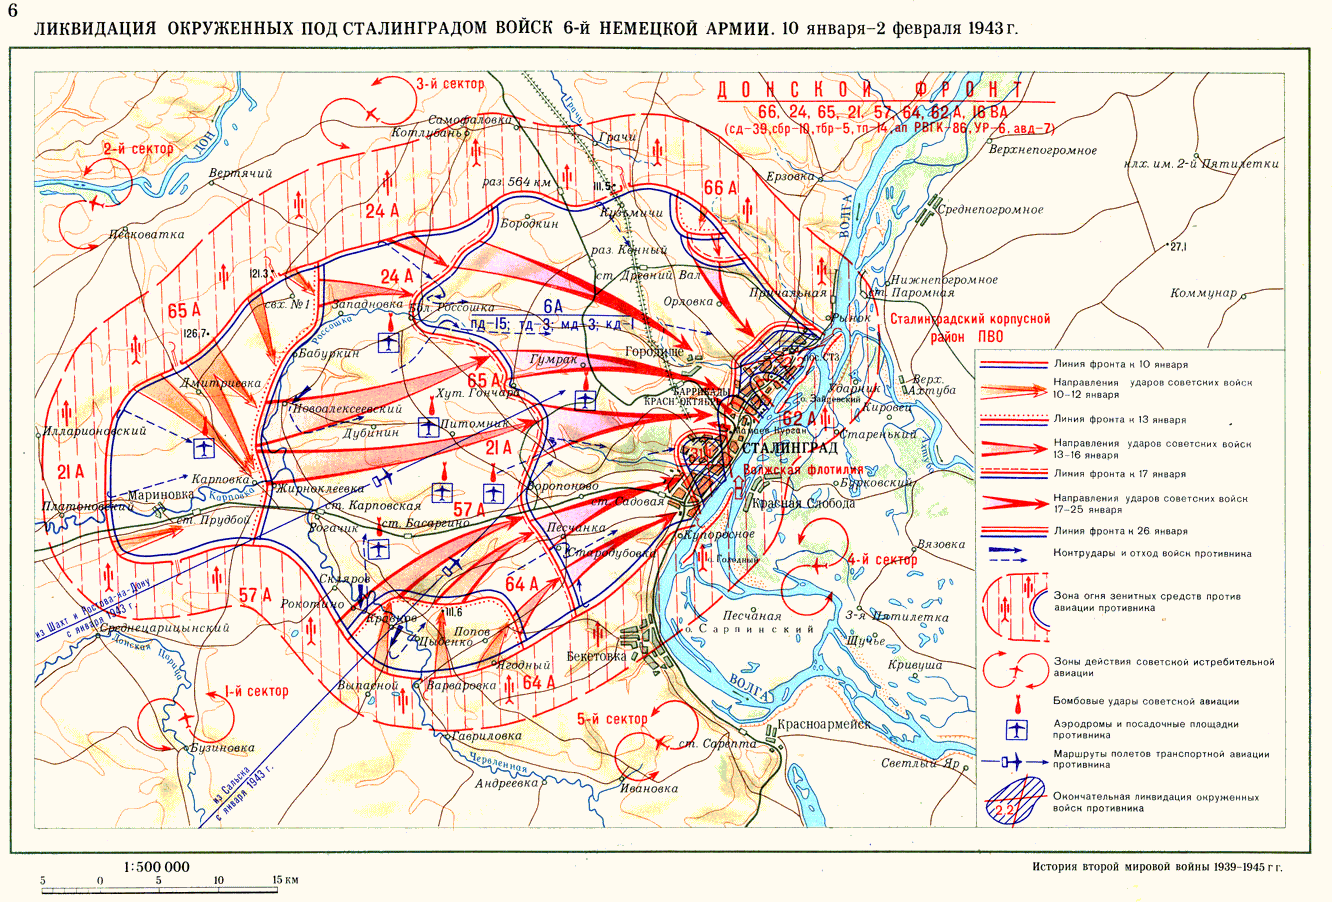 Сталинградская битва план сторон